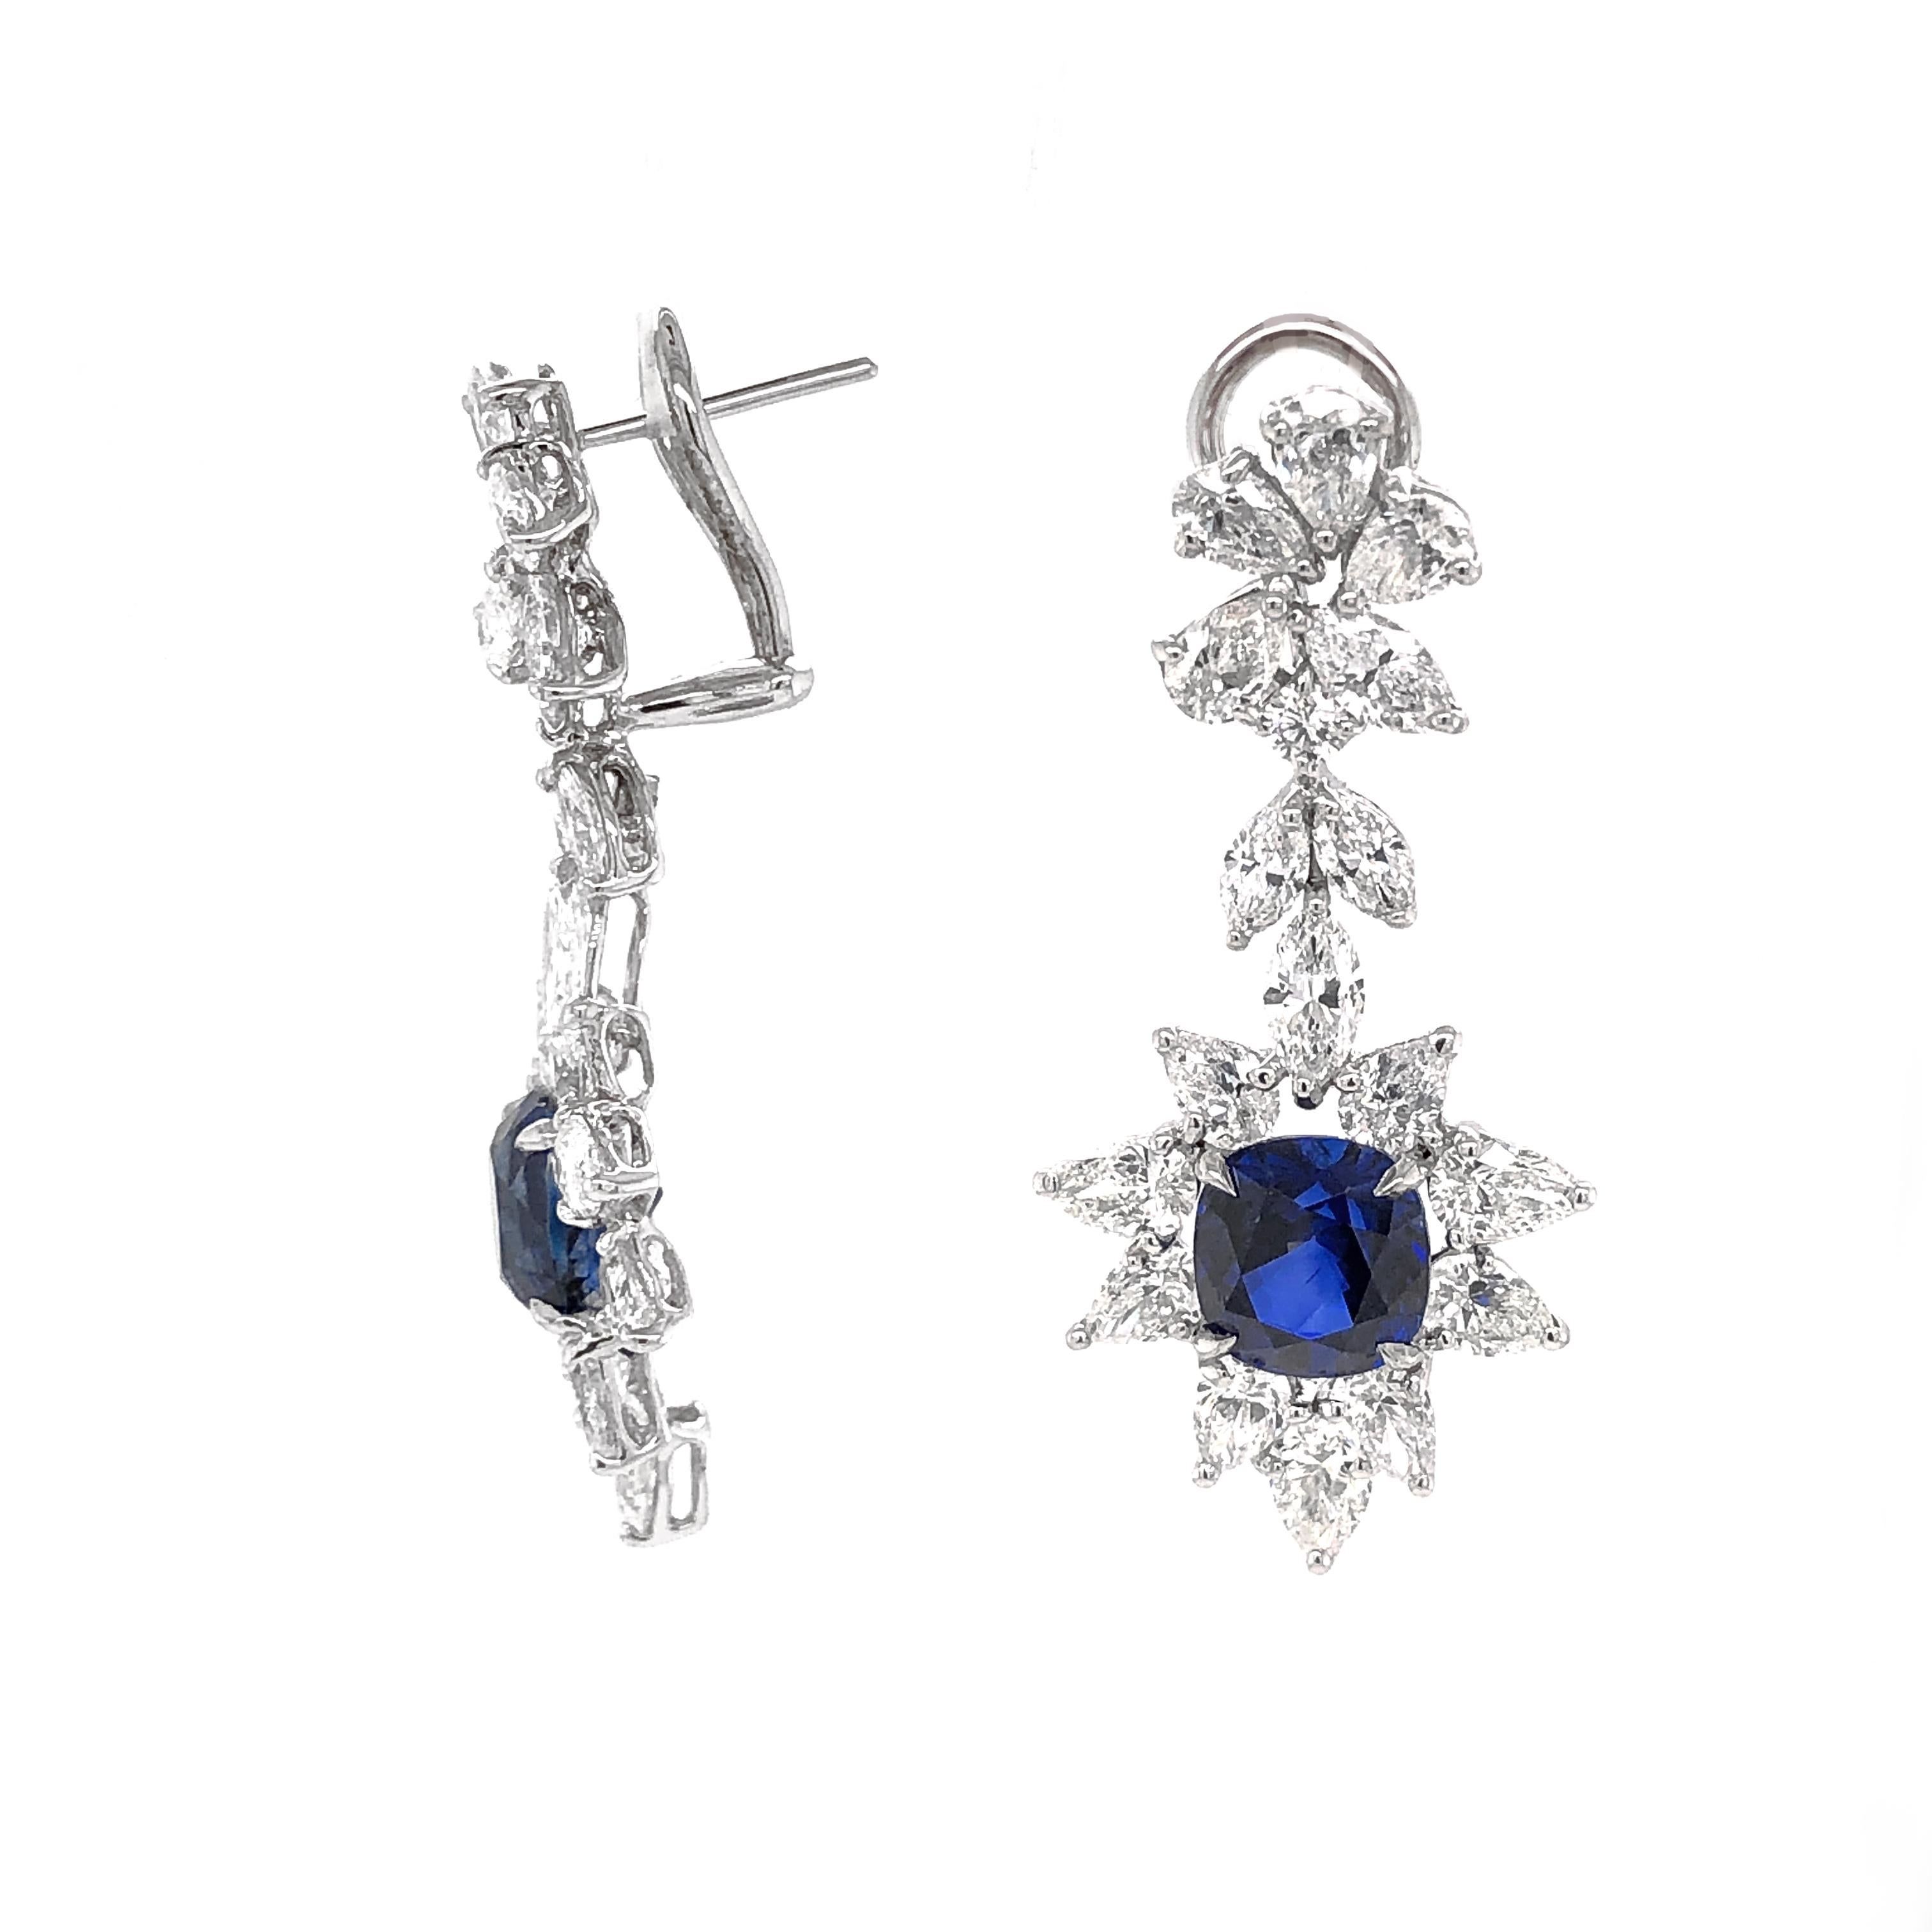 Contemporary Certified Cushion Cut Ceylon Sapphires 8.38 Carat Diamond Chandelier Earrings For Sale